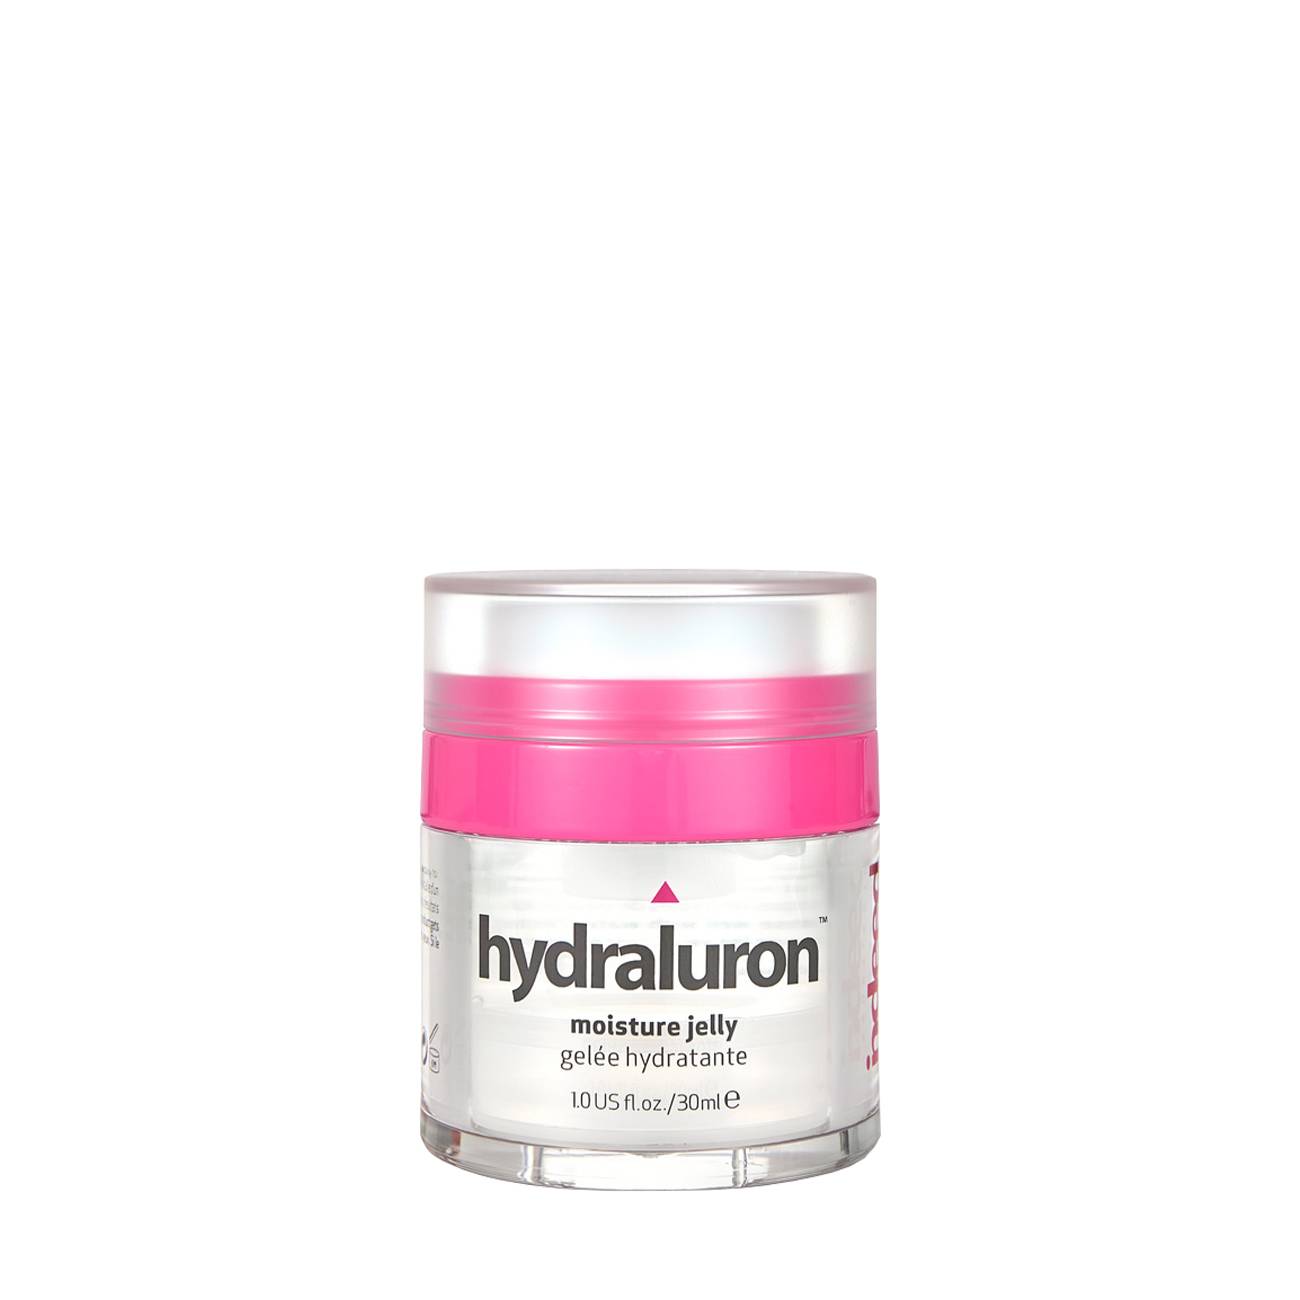 Hydraluron Moisture Gel 30 ml bestvalue.eu